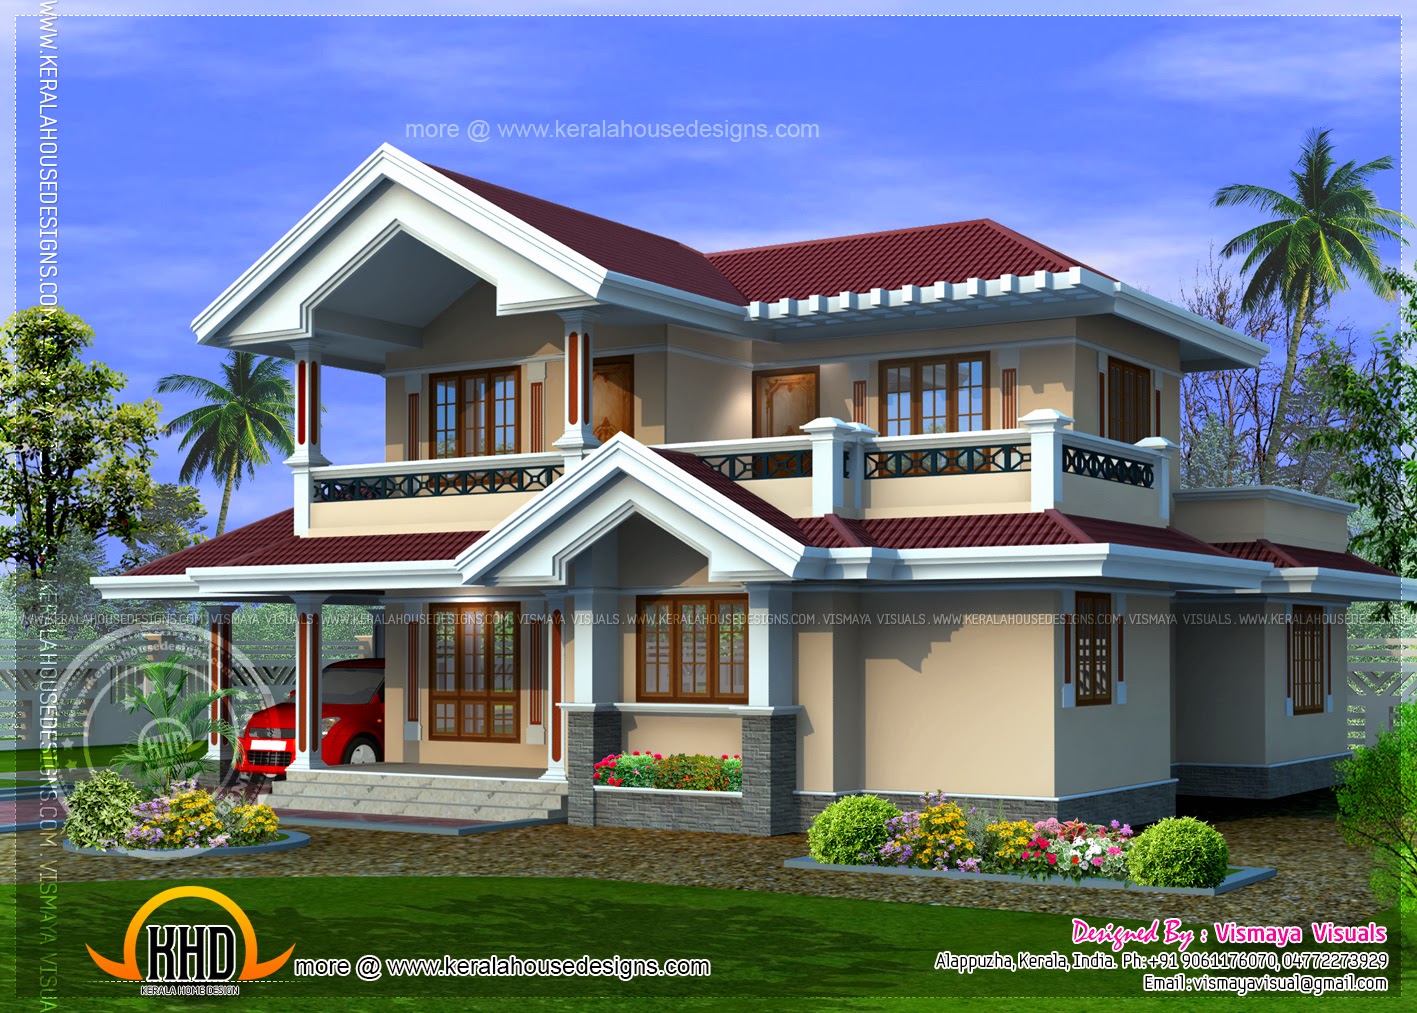  Kerala  style  villa plan  in 1850 square feet Home  Kerala  